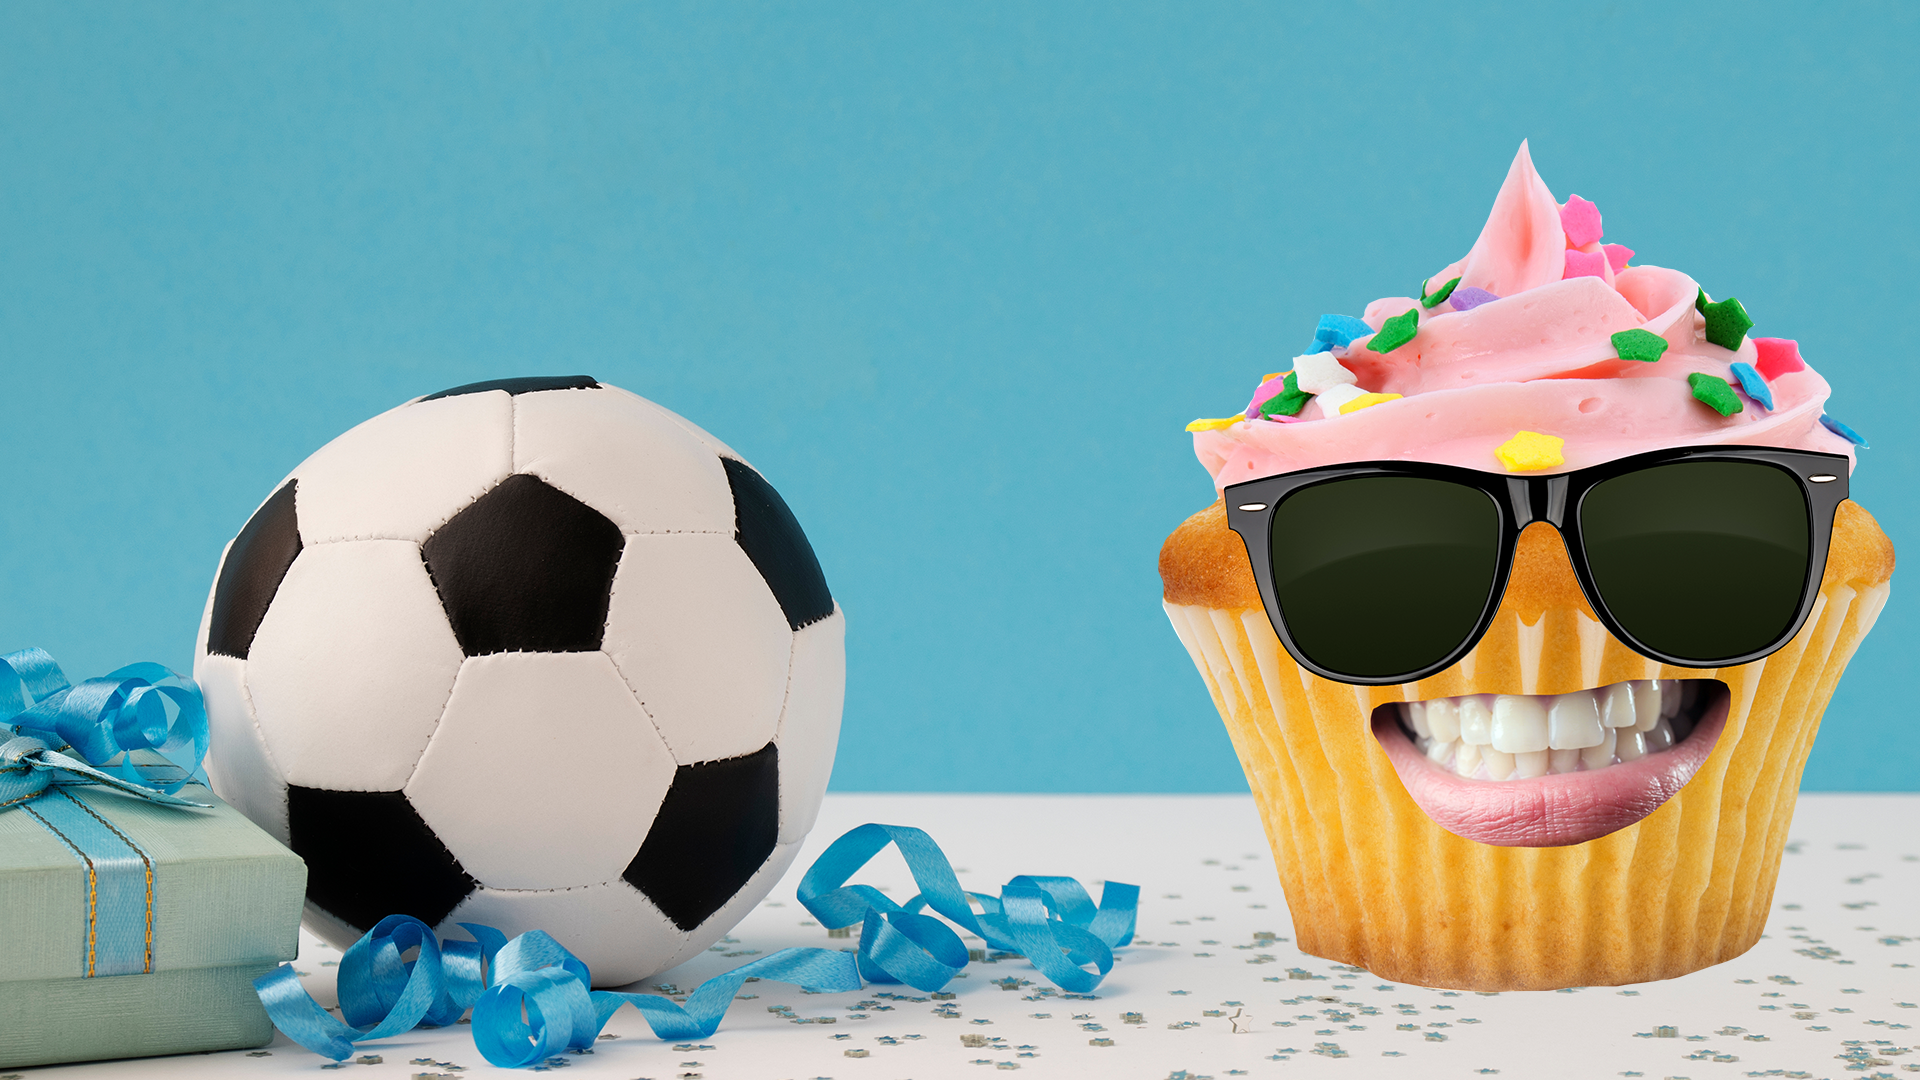 Football, present and cake